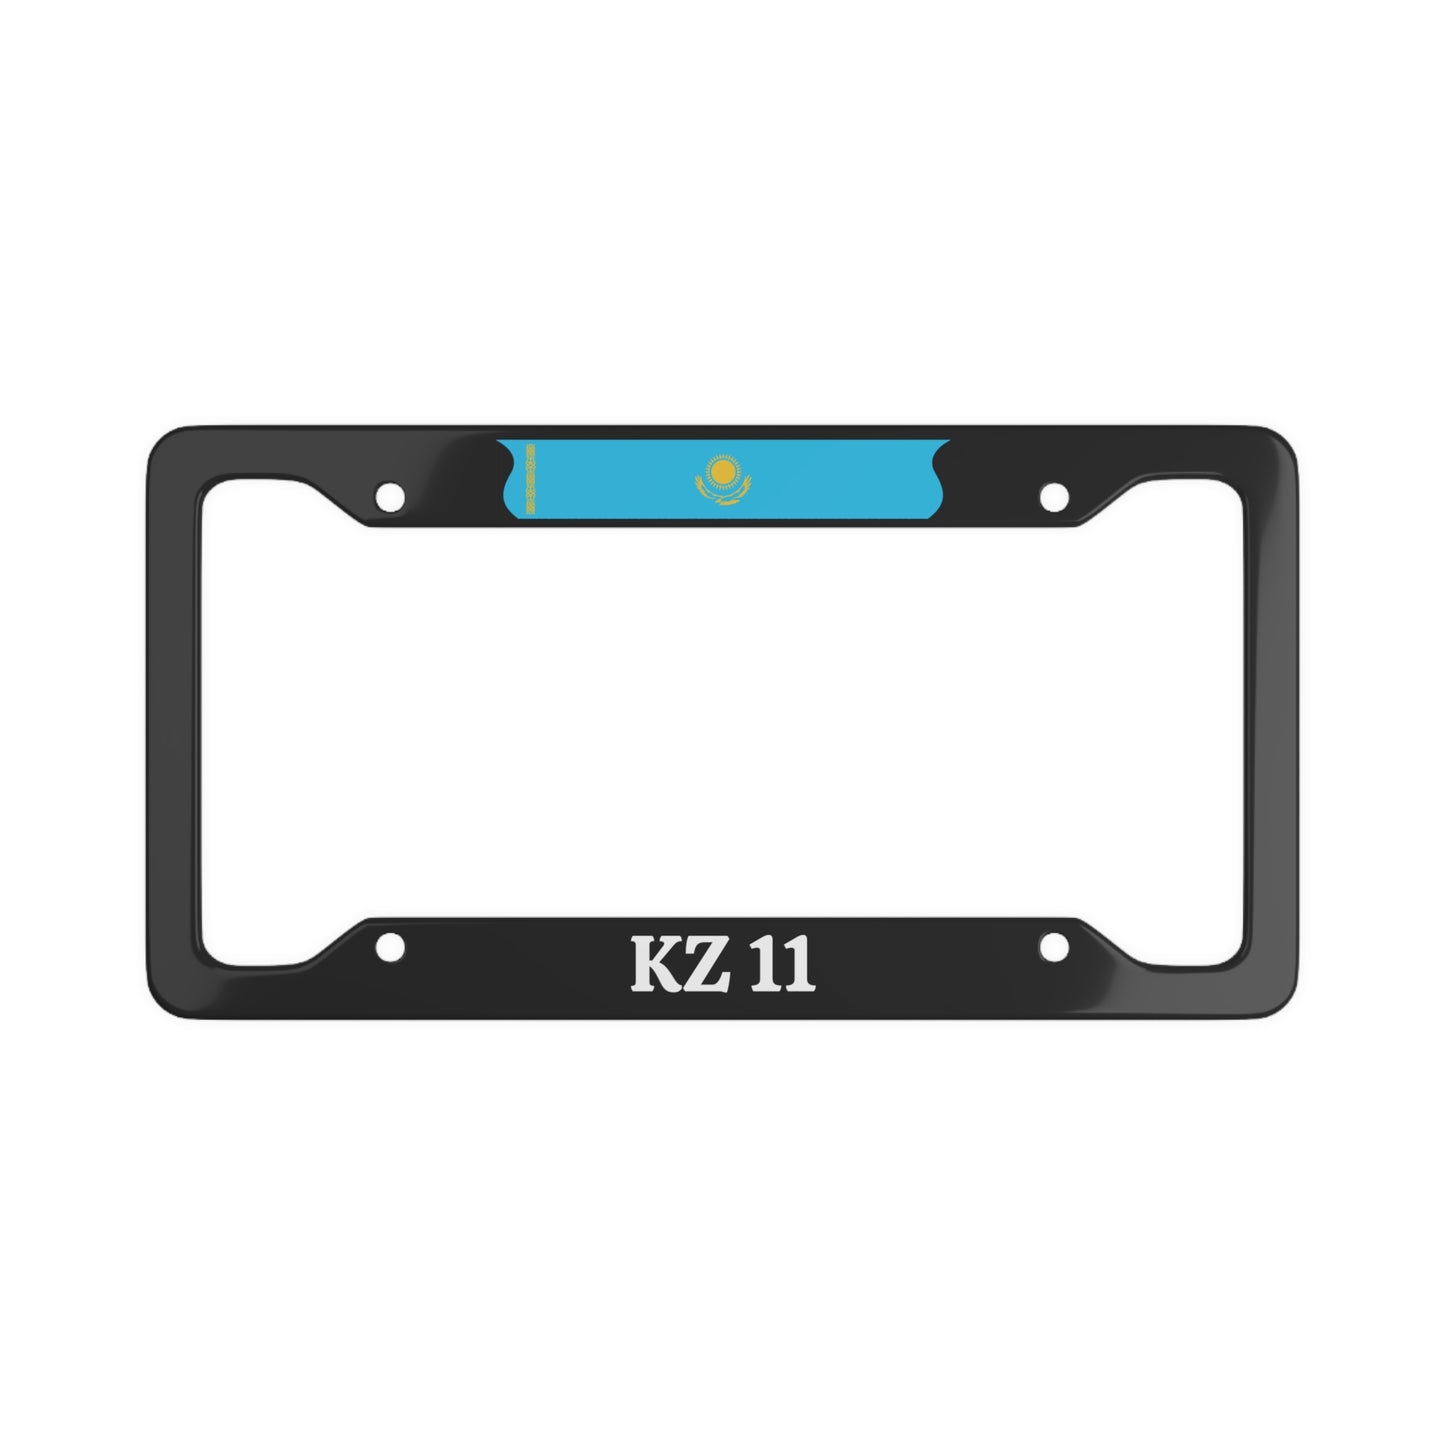 KZ 11 License Plate Frame